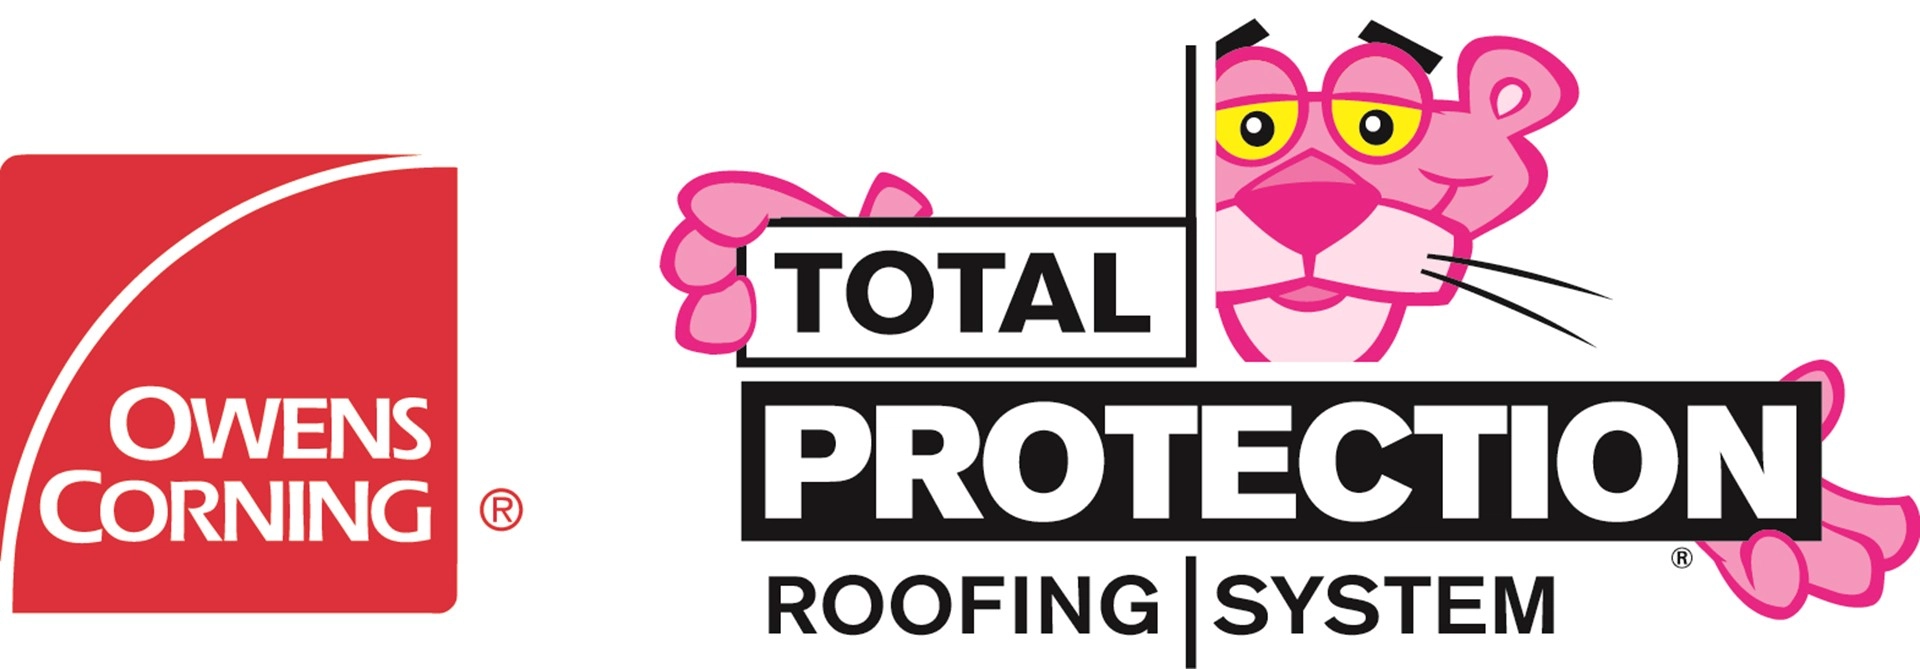 Tingley Roofing, Inc. Logo